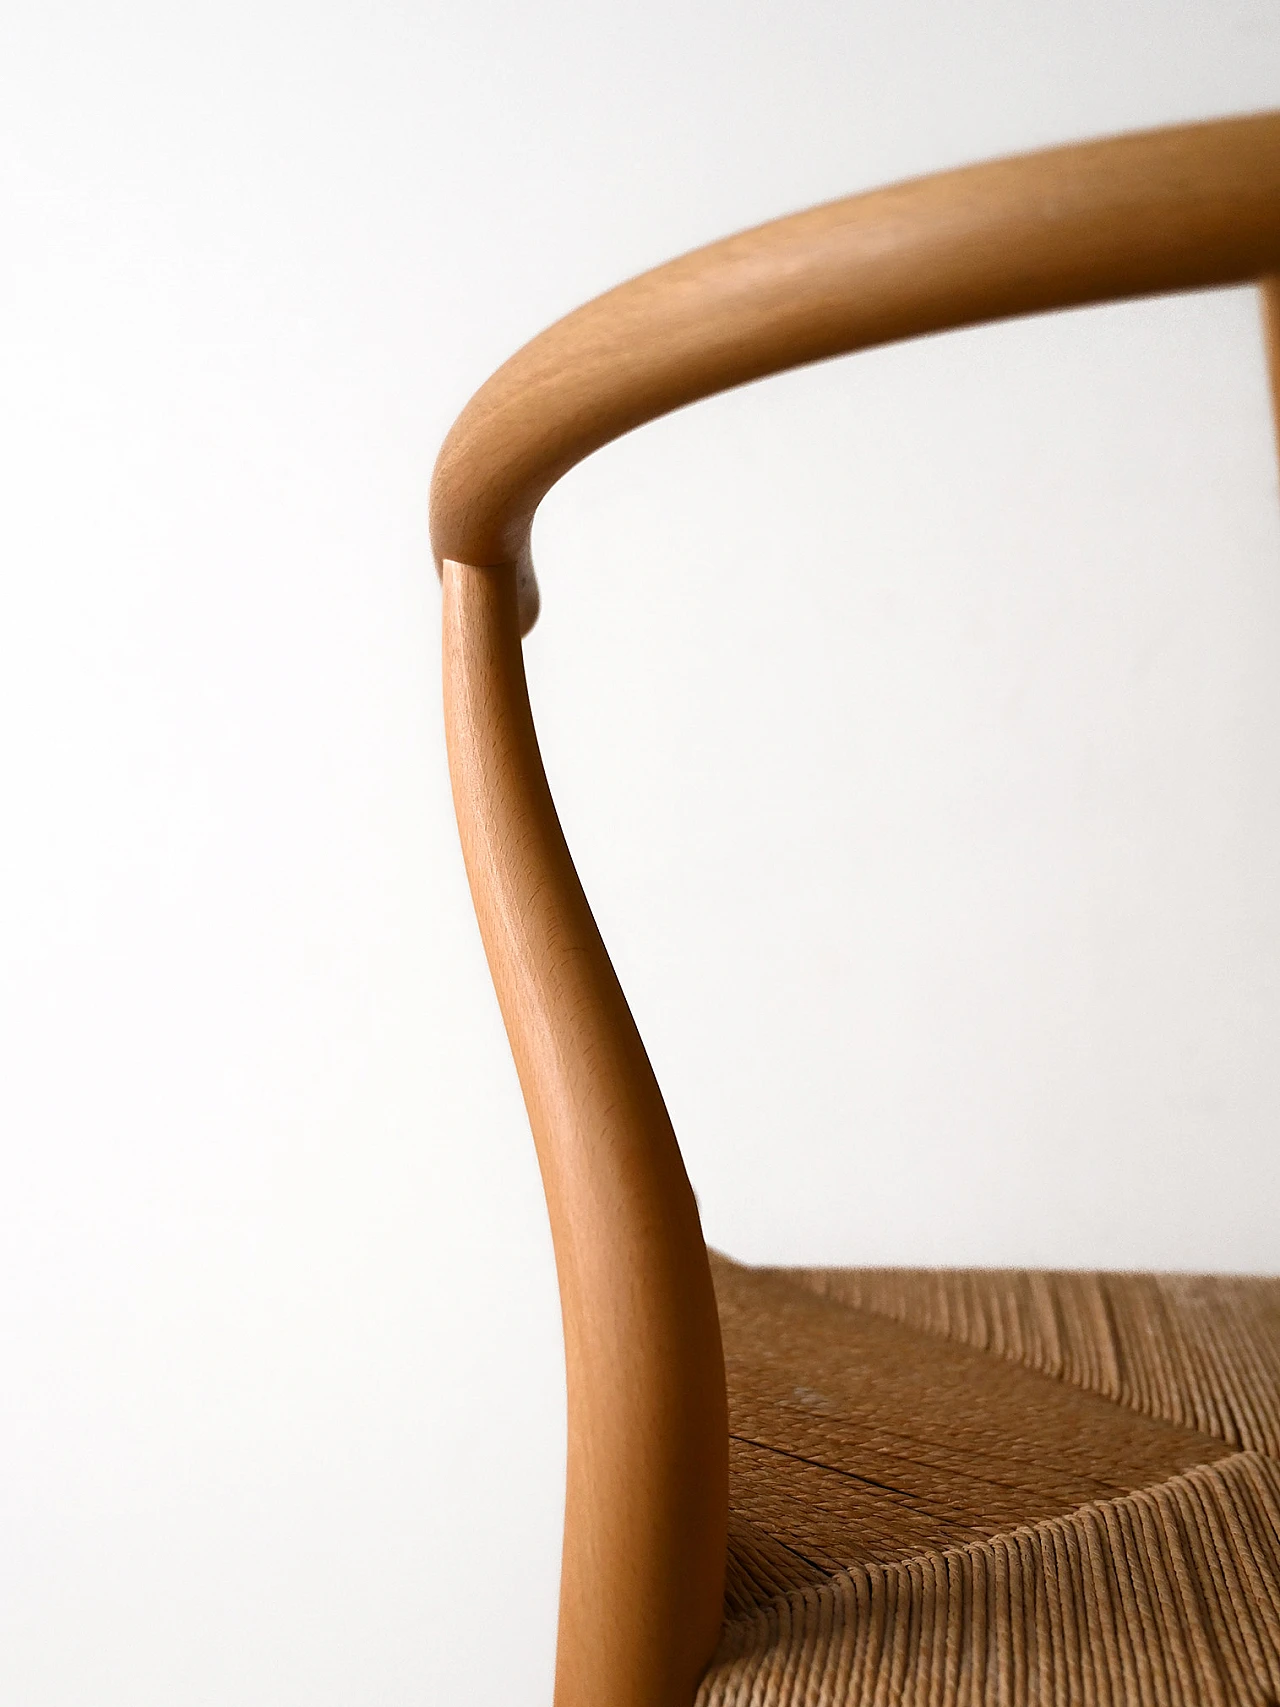 4 CH24 Wishbone Chair chairs by Hans J. Wegner for Carl Hansen & Søn 12